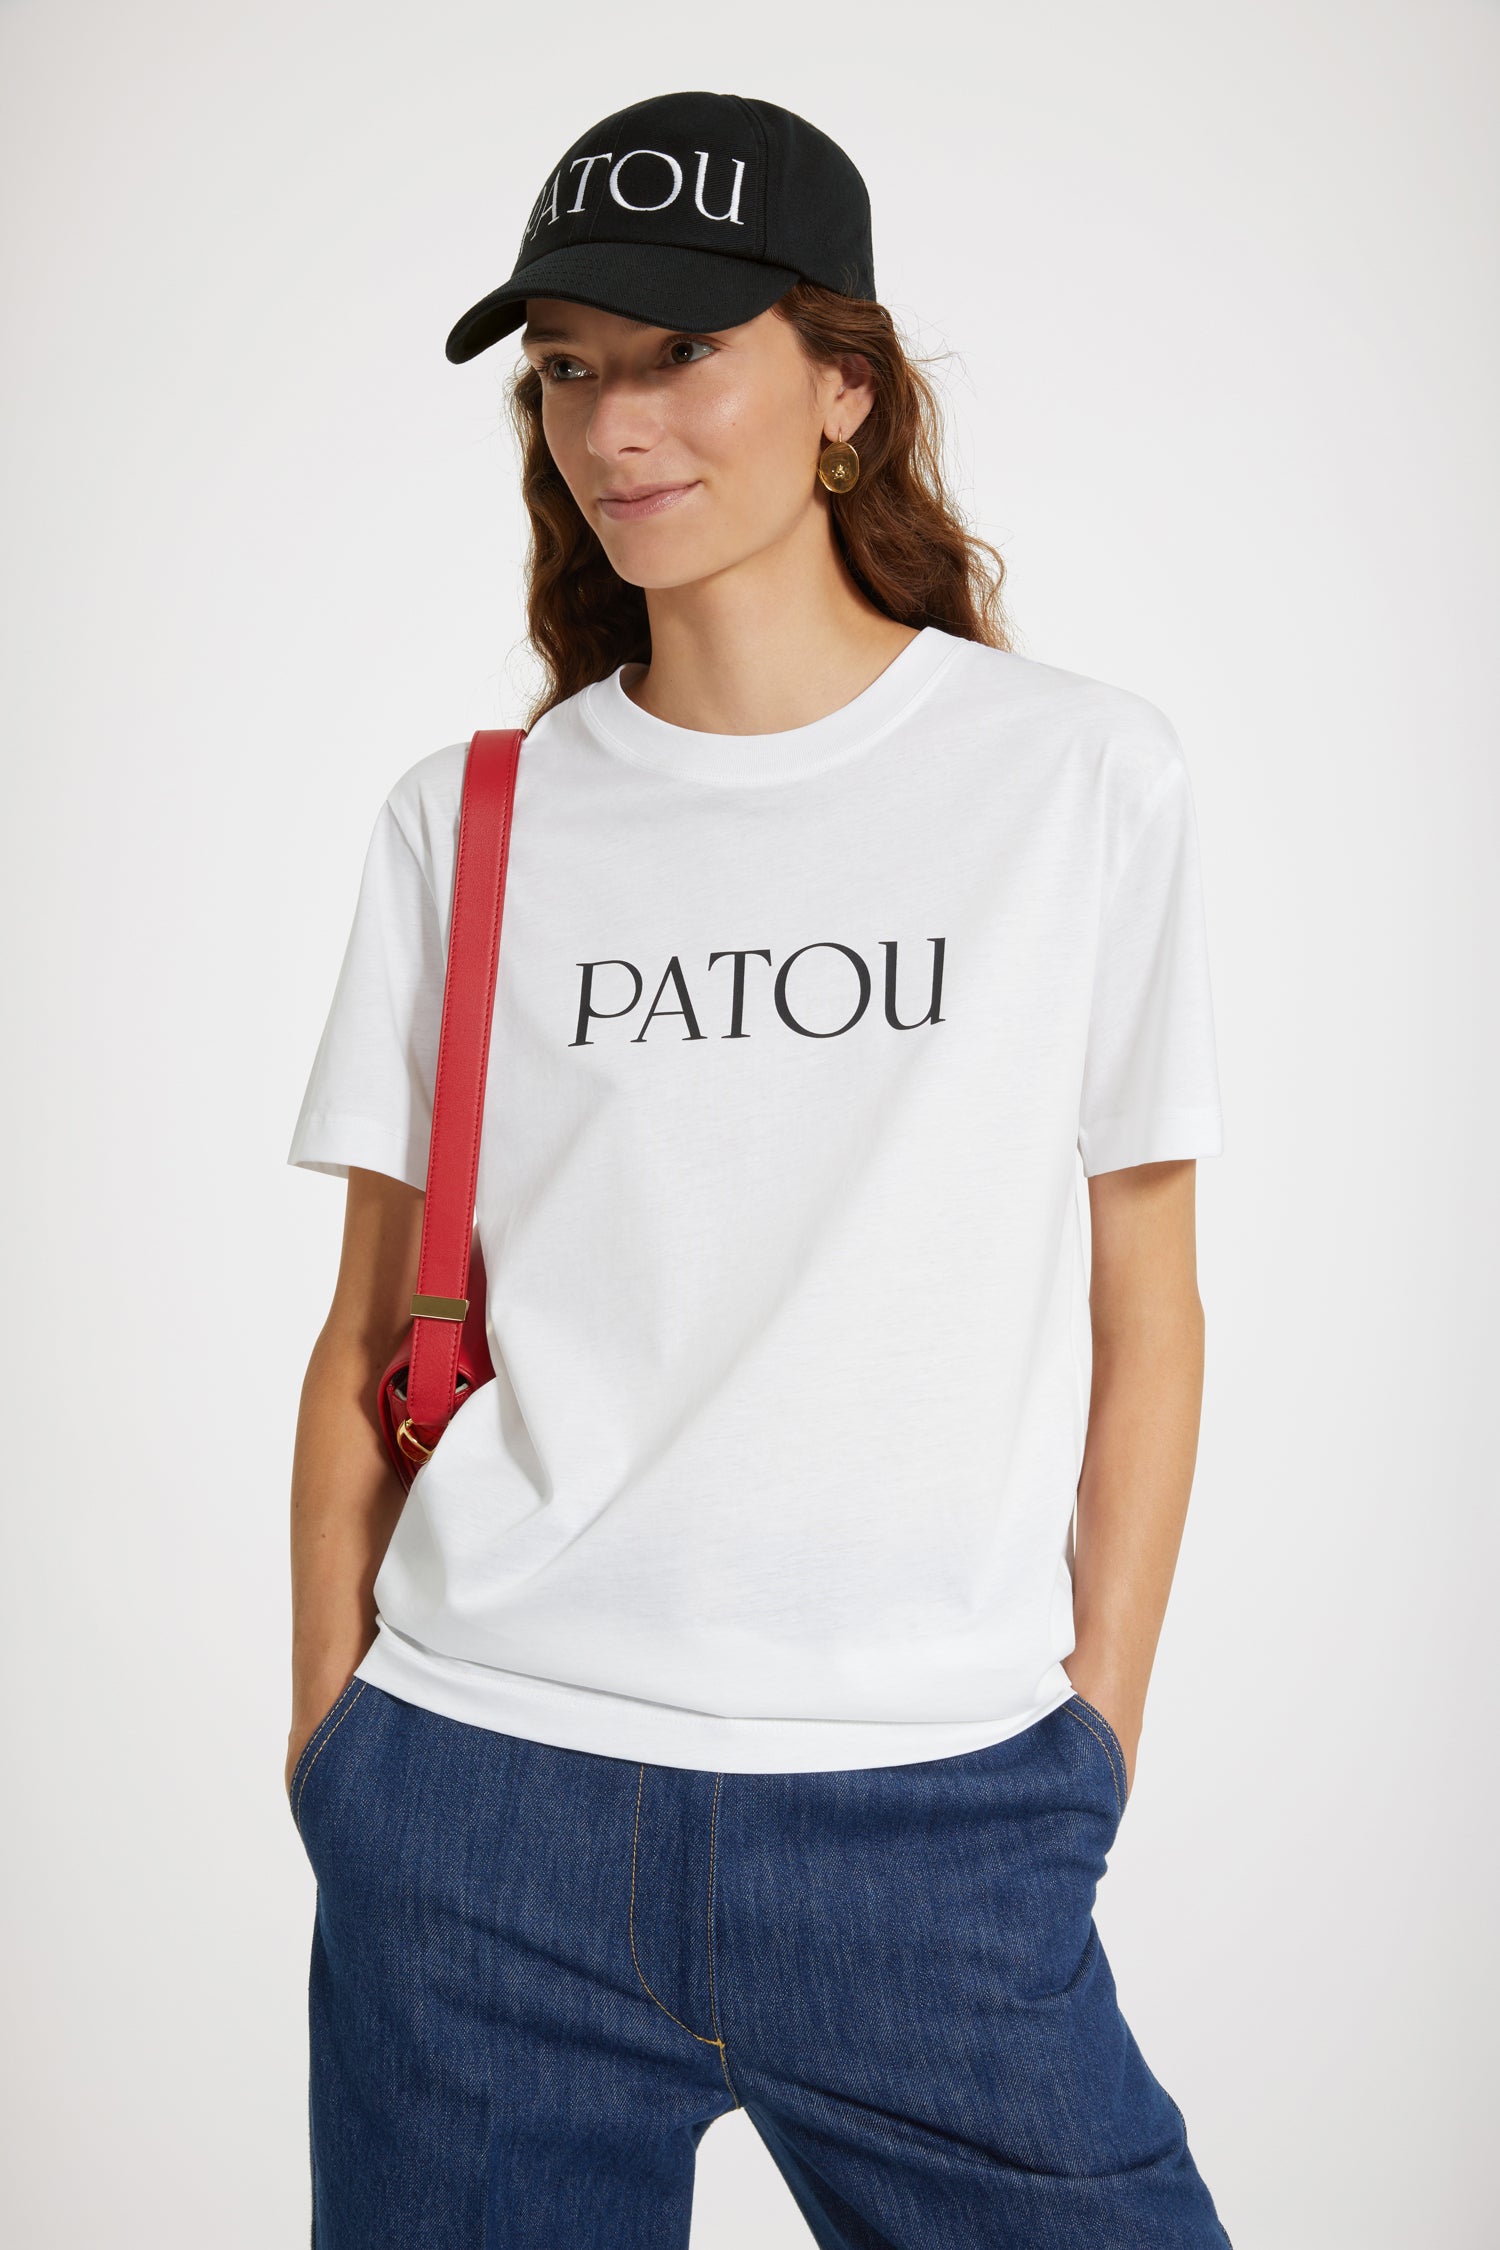 PATOU パトゥ ロゴTシャツ